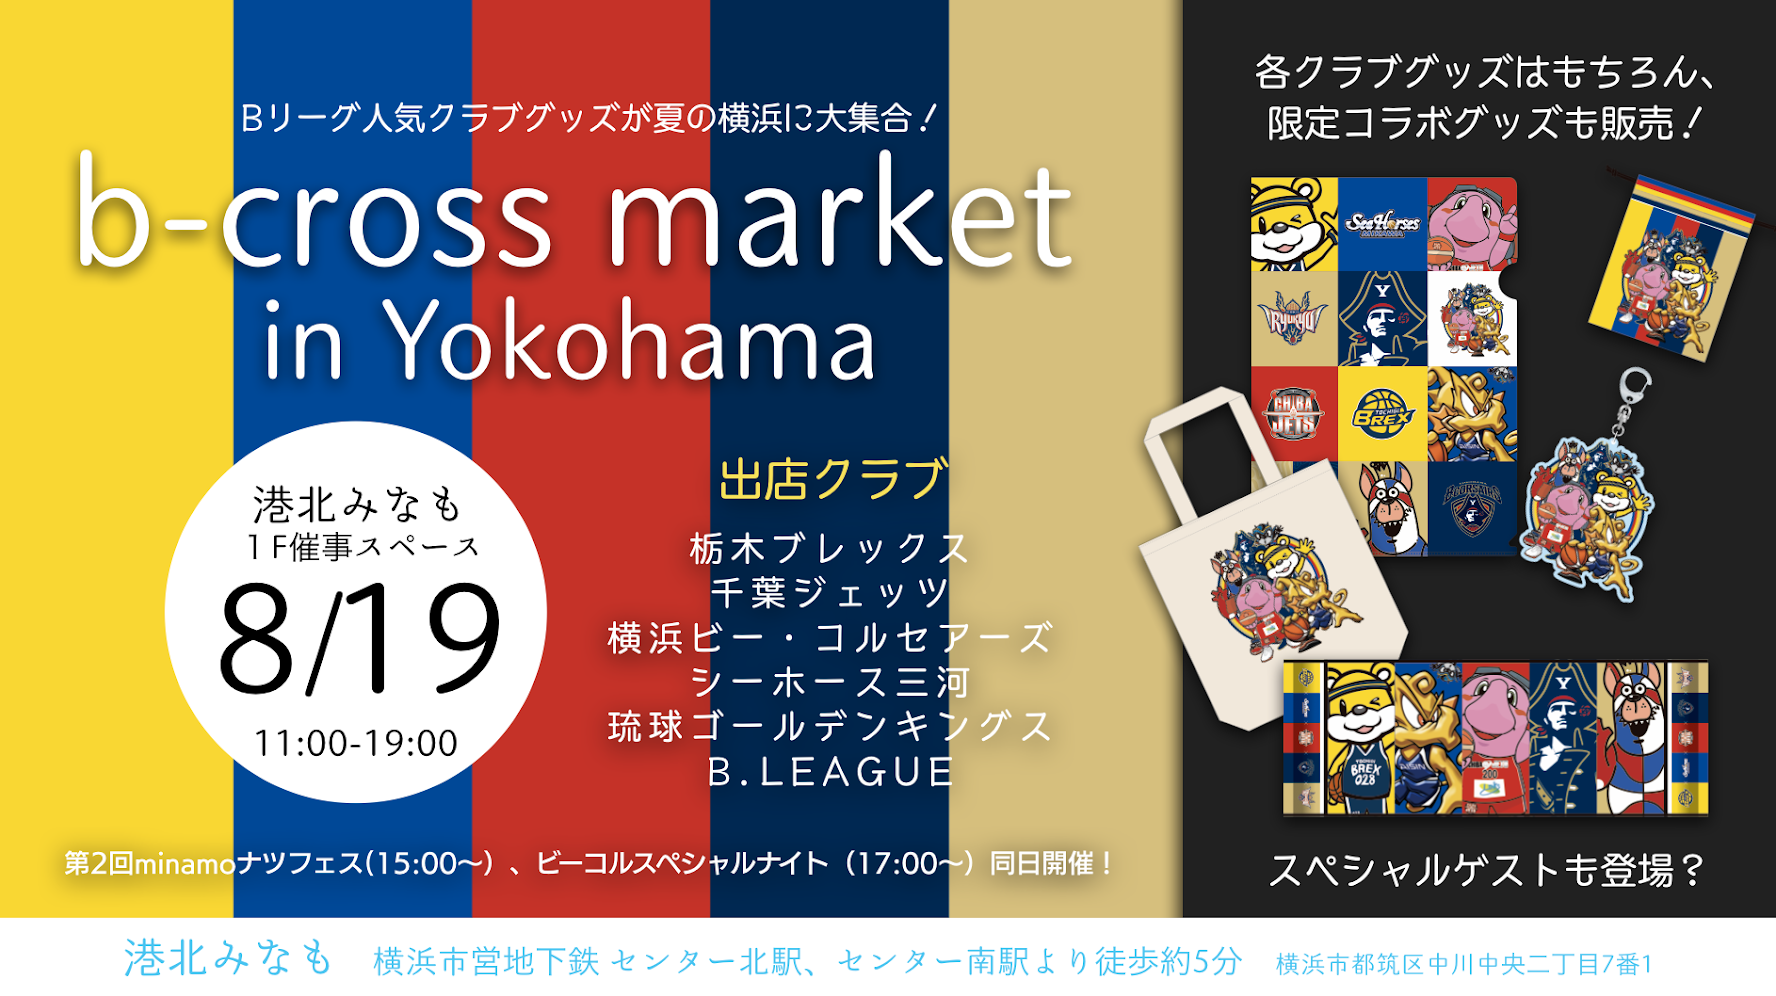 8 19 B Cross Market In Yokohama に参加します 千葉ジェッツ